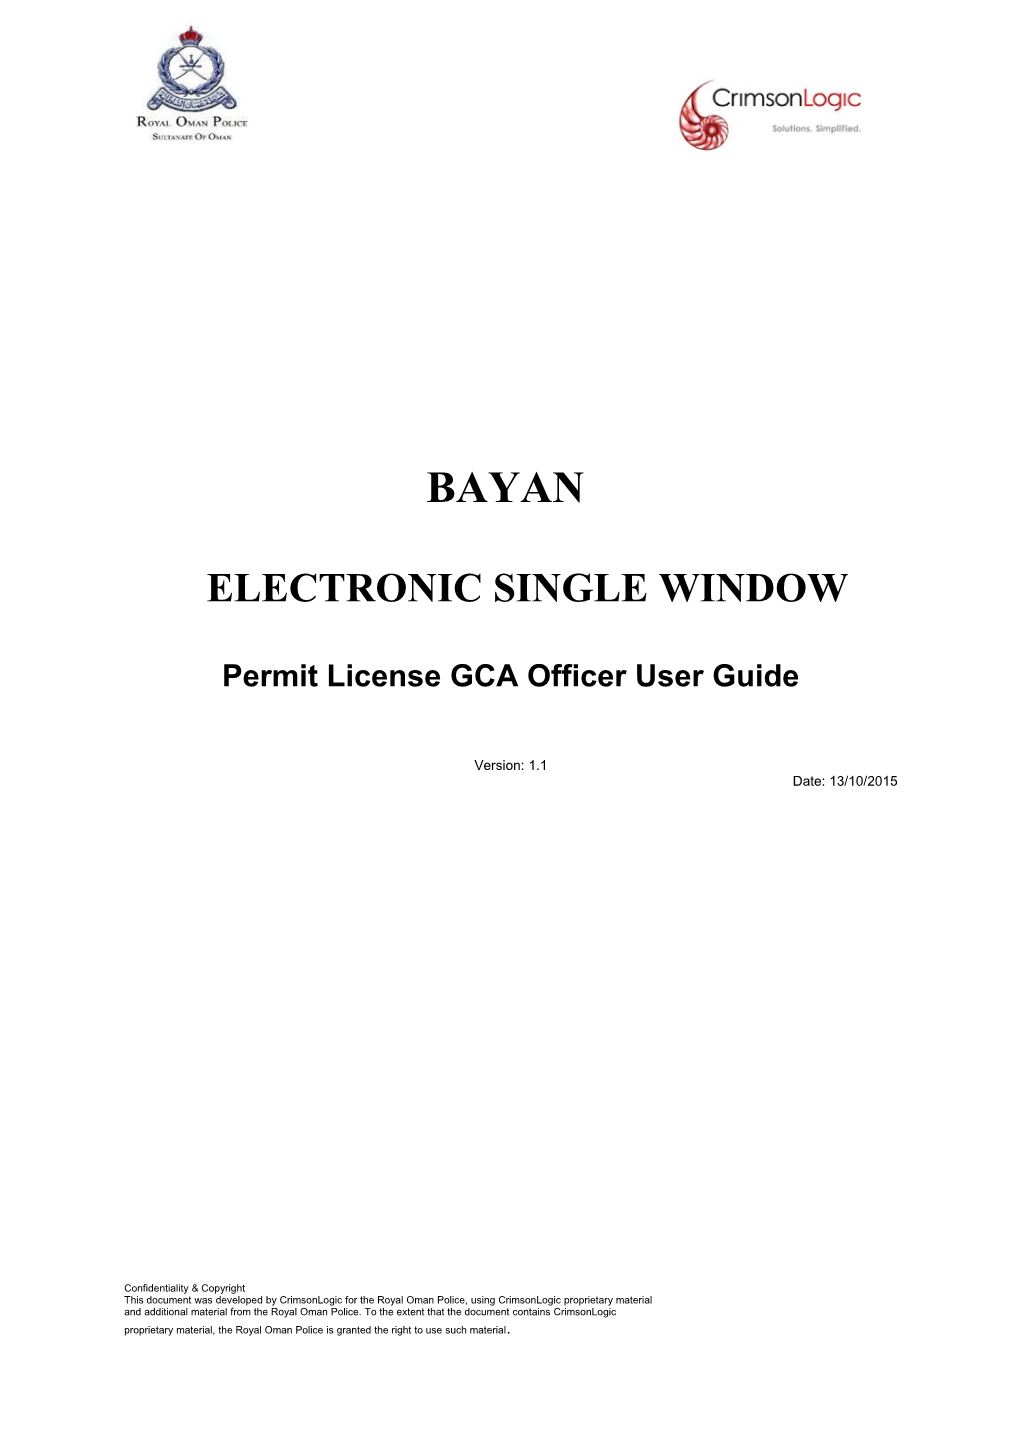 Permit License GCA Officer User Guide